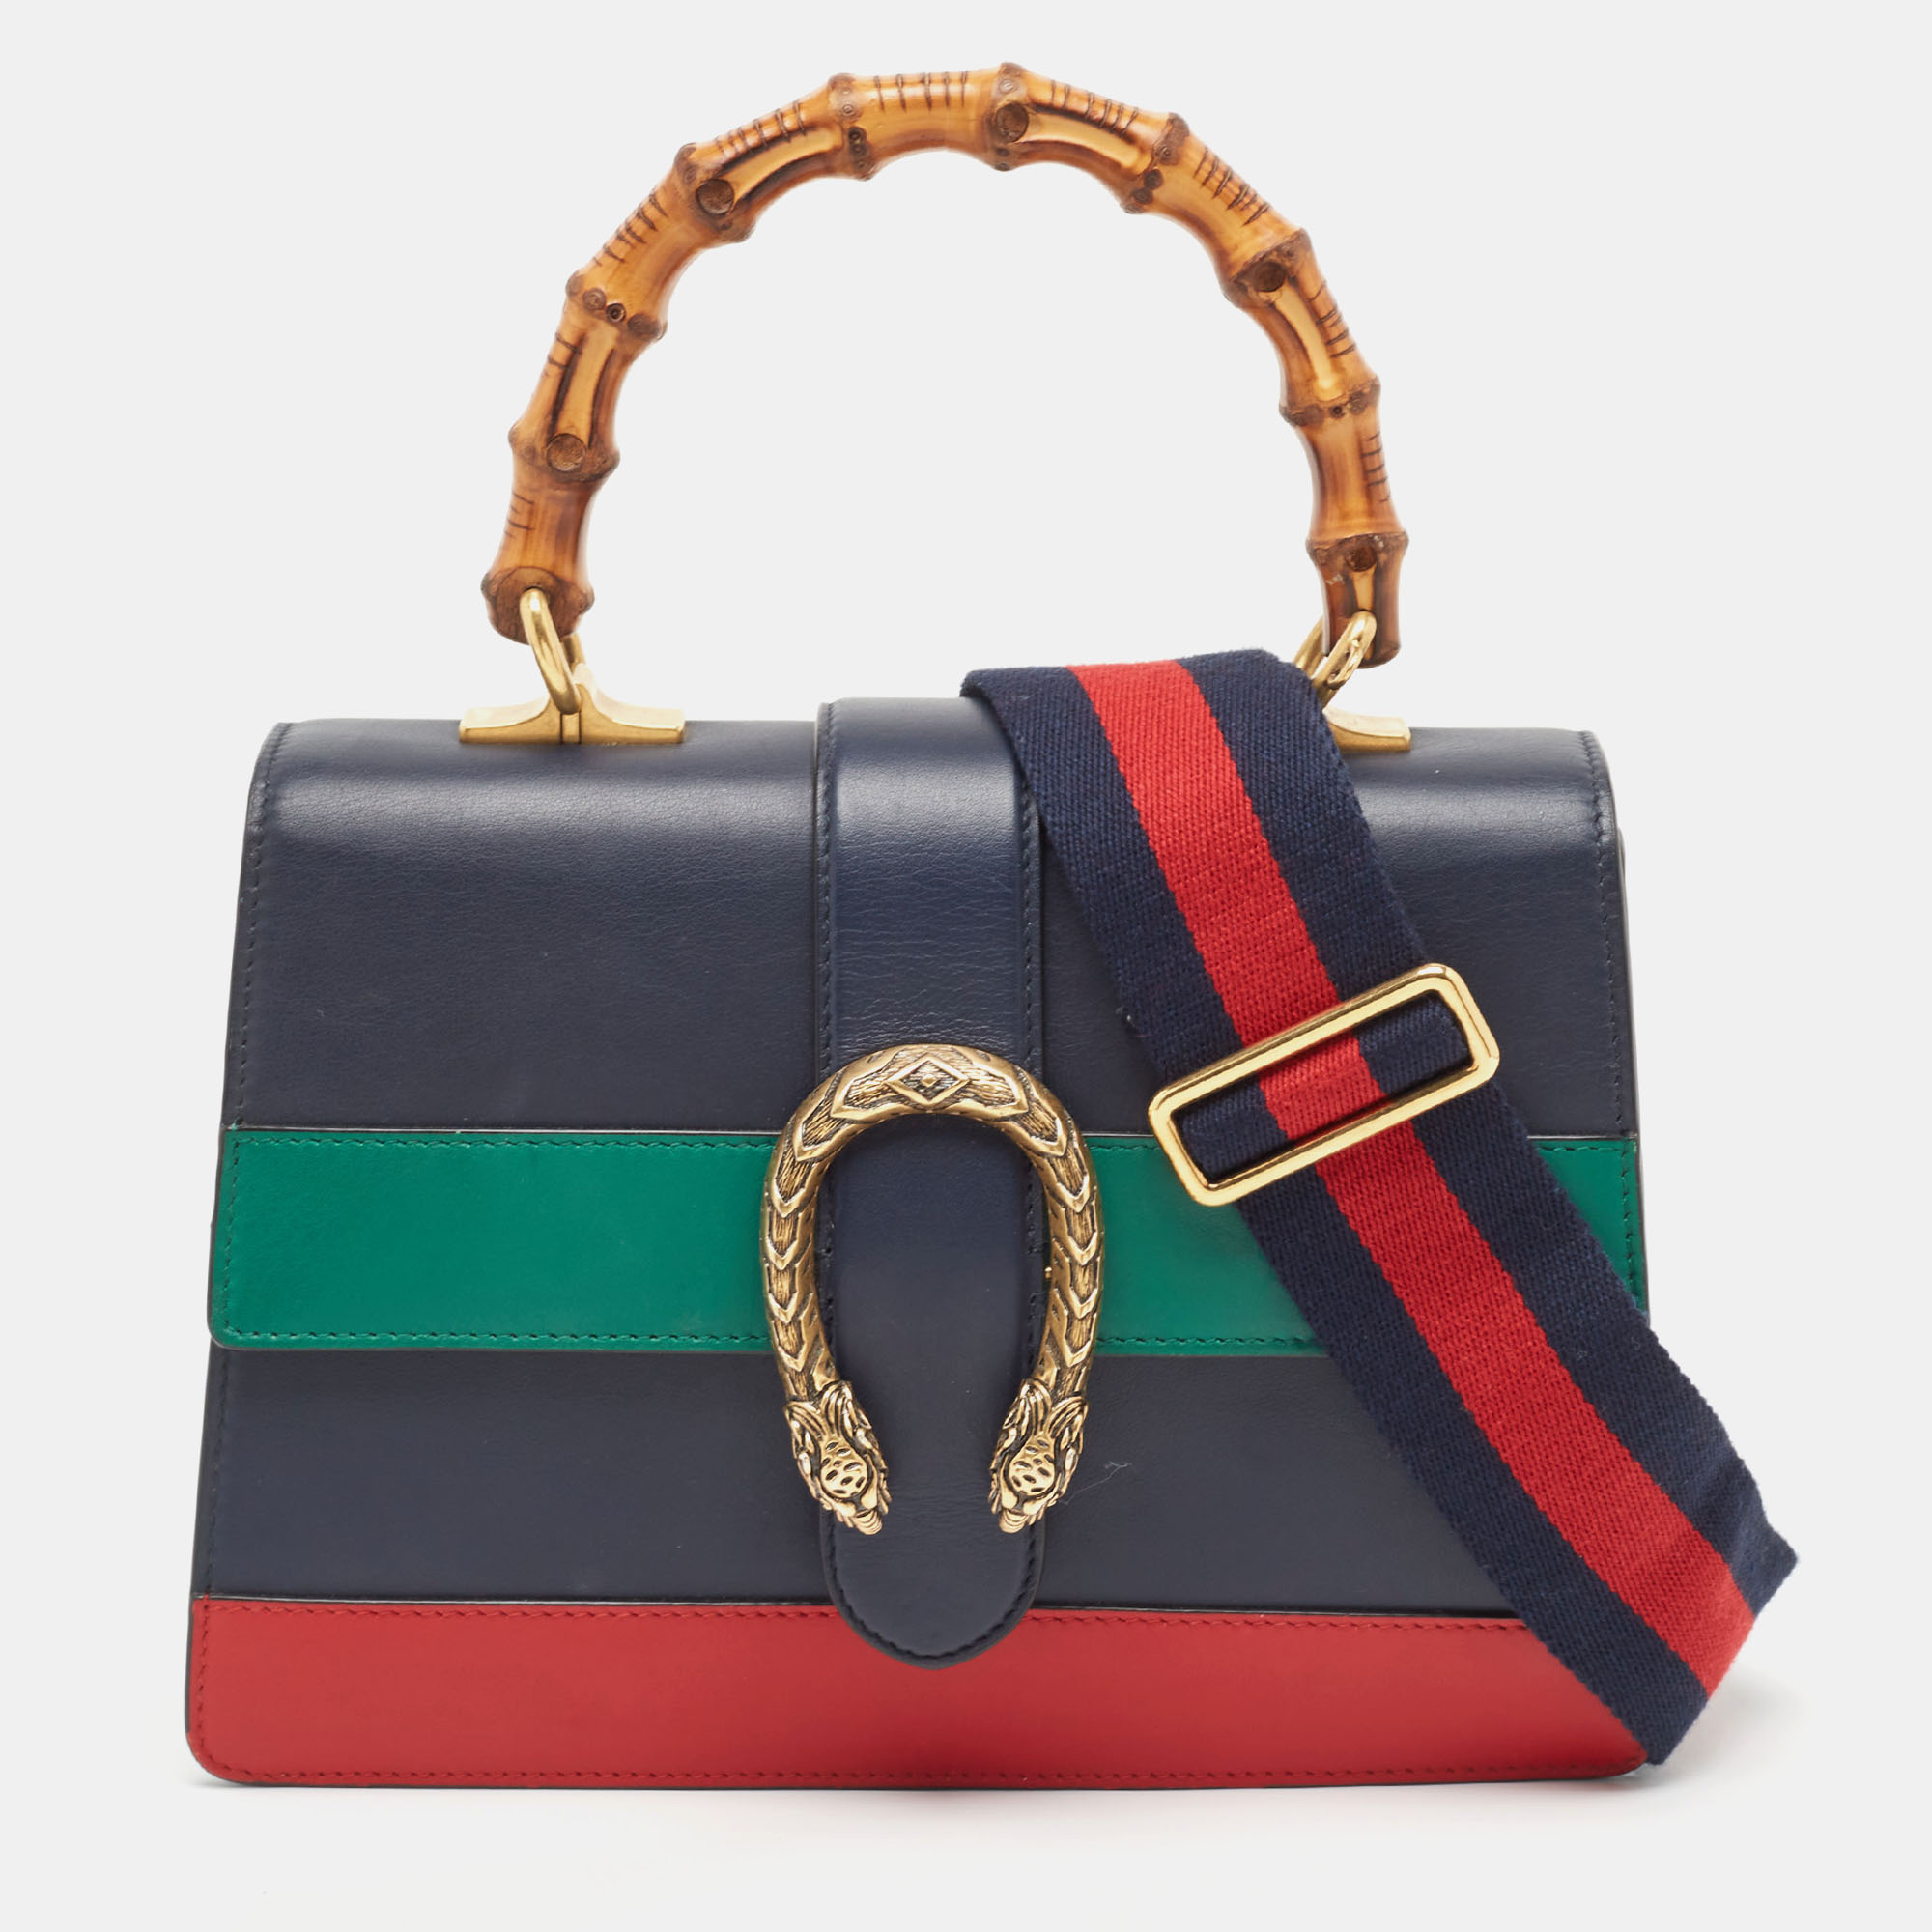 Gucci tricolor leather medium dionysus bamboo top handle bag